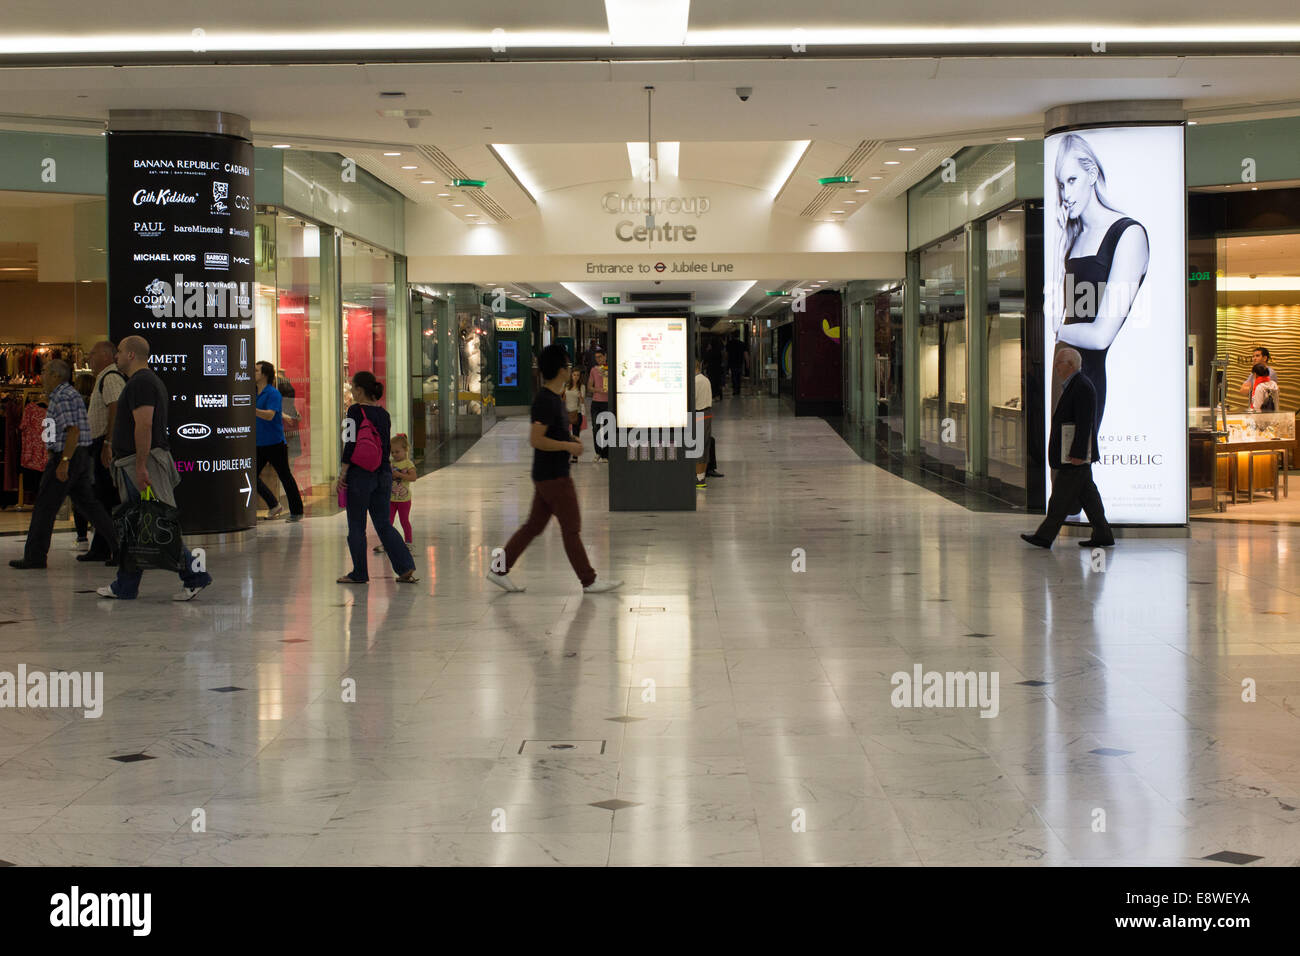 Canada Square shopping centre mall Stock Photo - Alamy